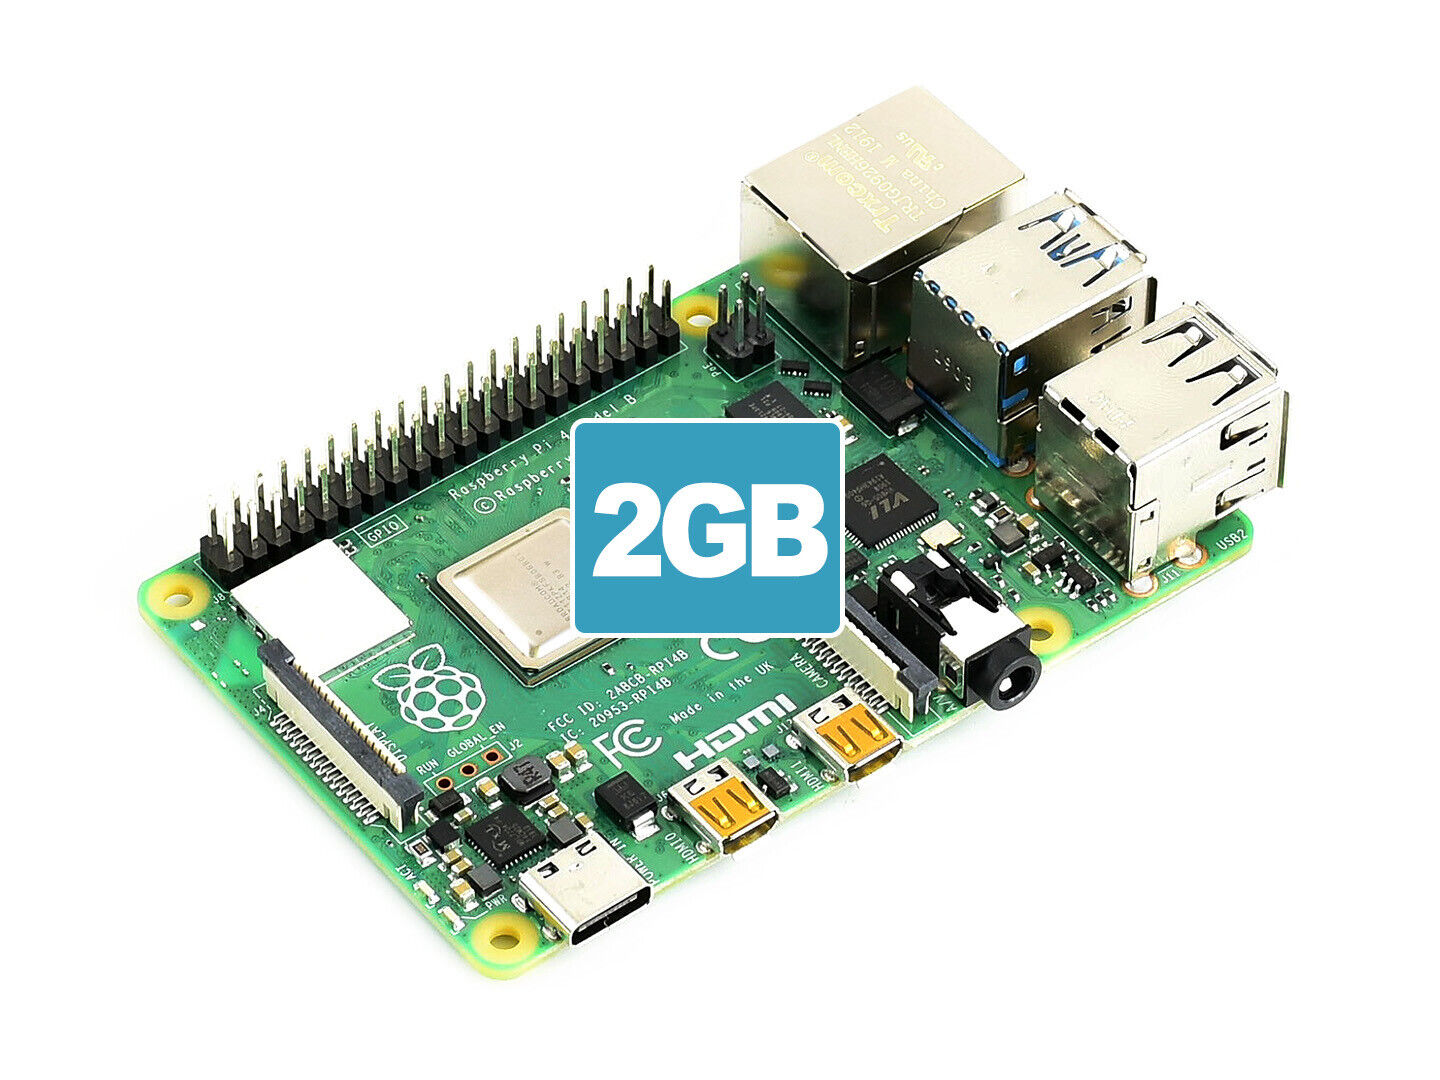 Raspberry Pi 4 Model B 4GB 8GB RAM Computer Brand New 64-bit Bluetooth WiFi